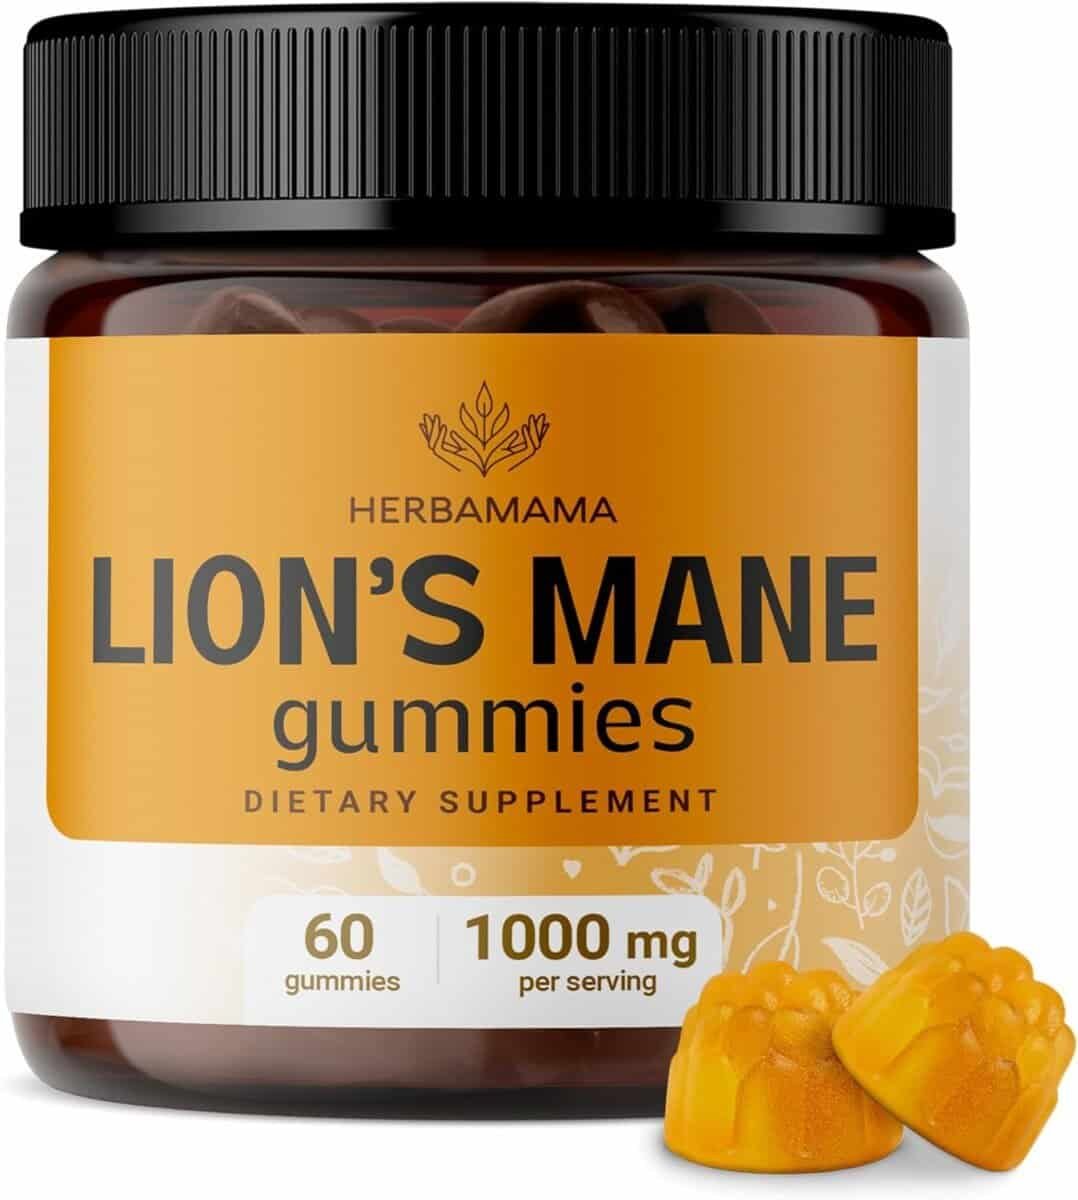 HERBAMAMA Lions Mane Gummies Review